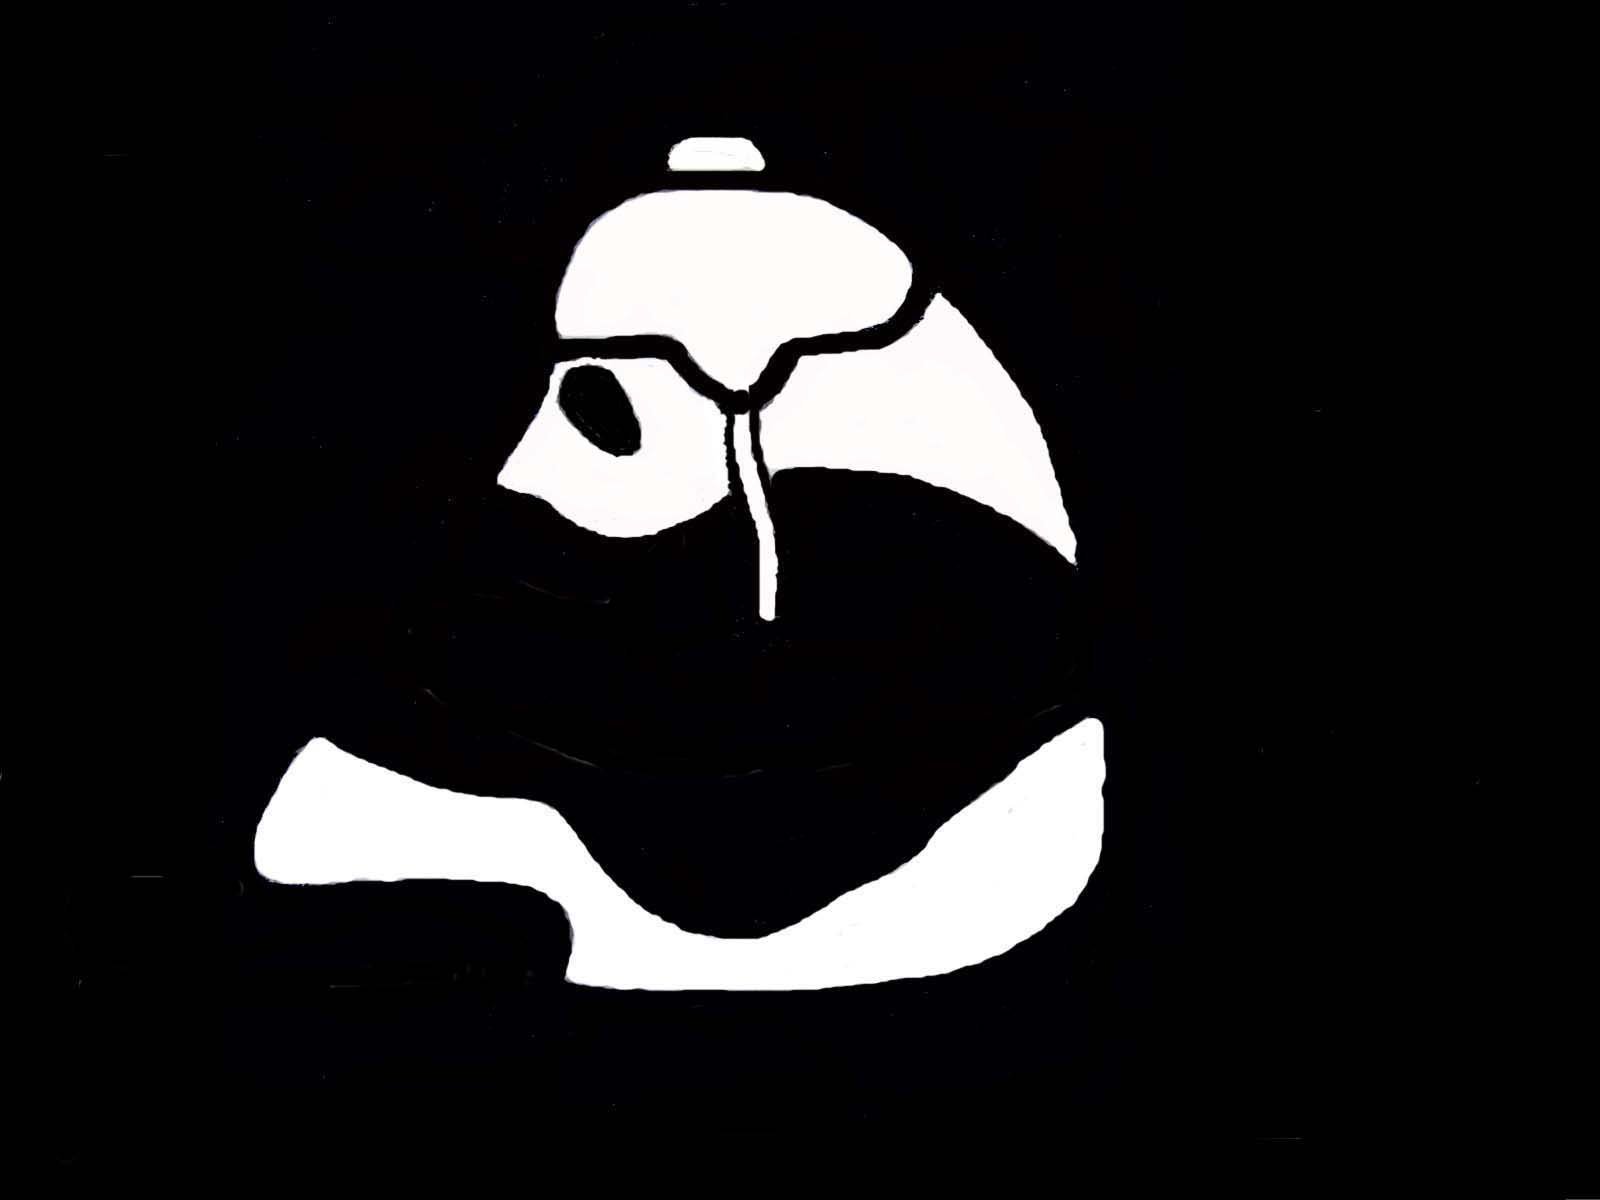 pangea logo